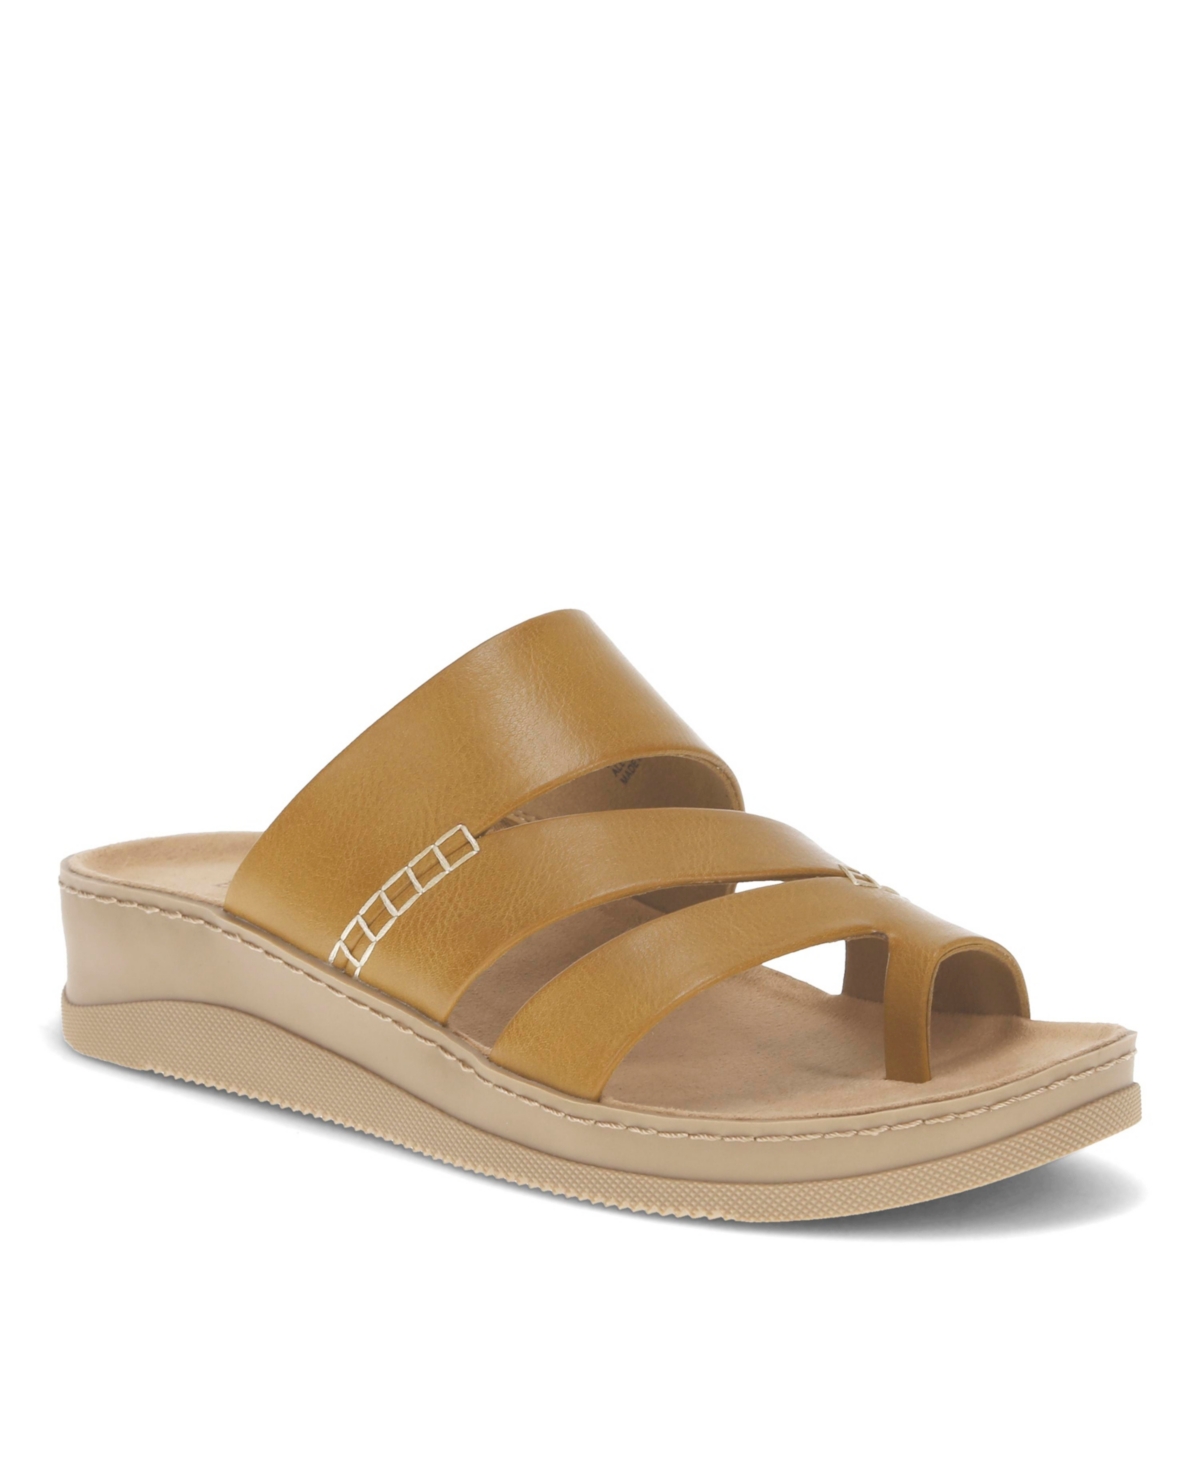 Women's Fresha Toe Loop Wedge Sandals - Gold